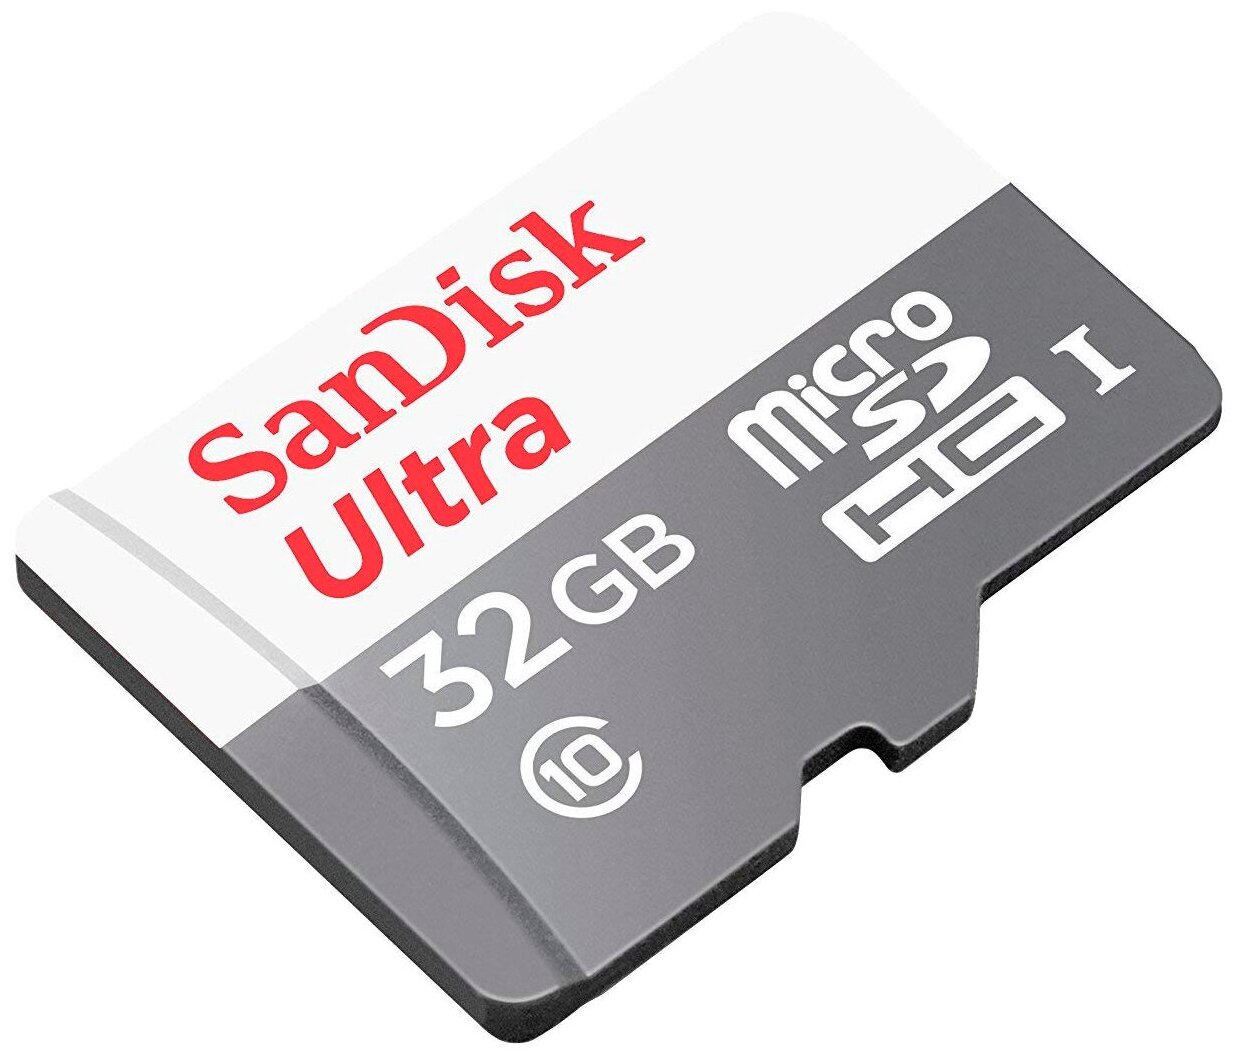 SanDisk Ultra microSDHC Class 10 UHSI 80MB/s + SD adapter - скорость обмена данными: 533x